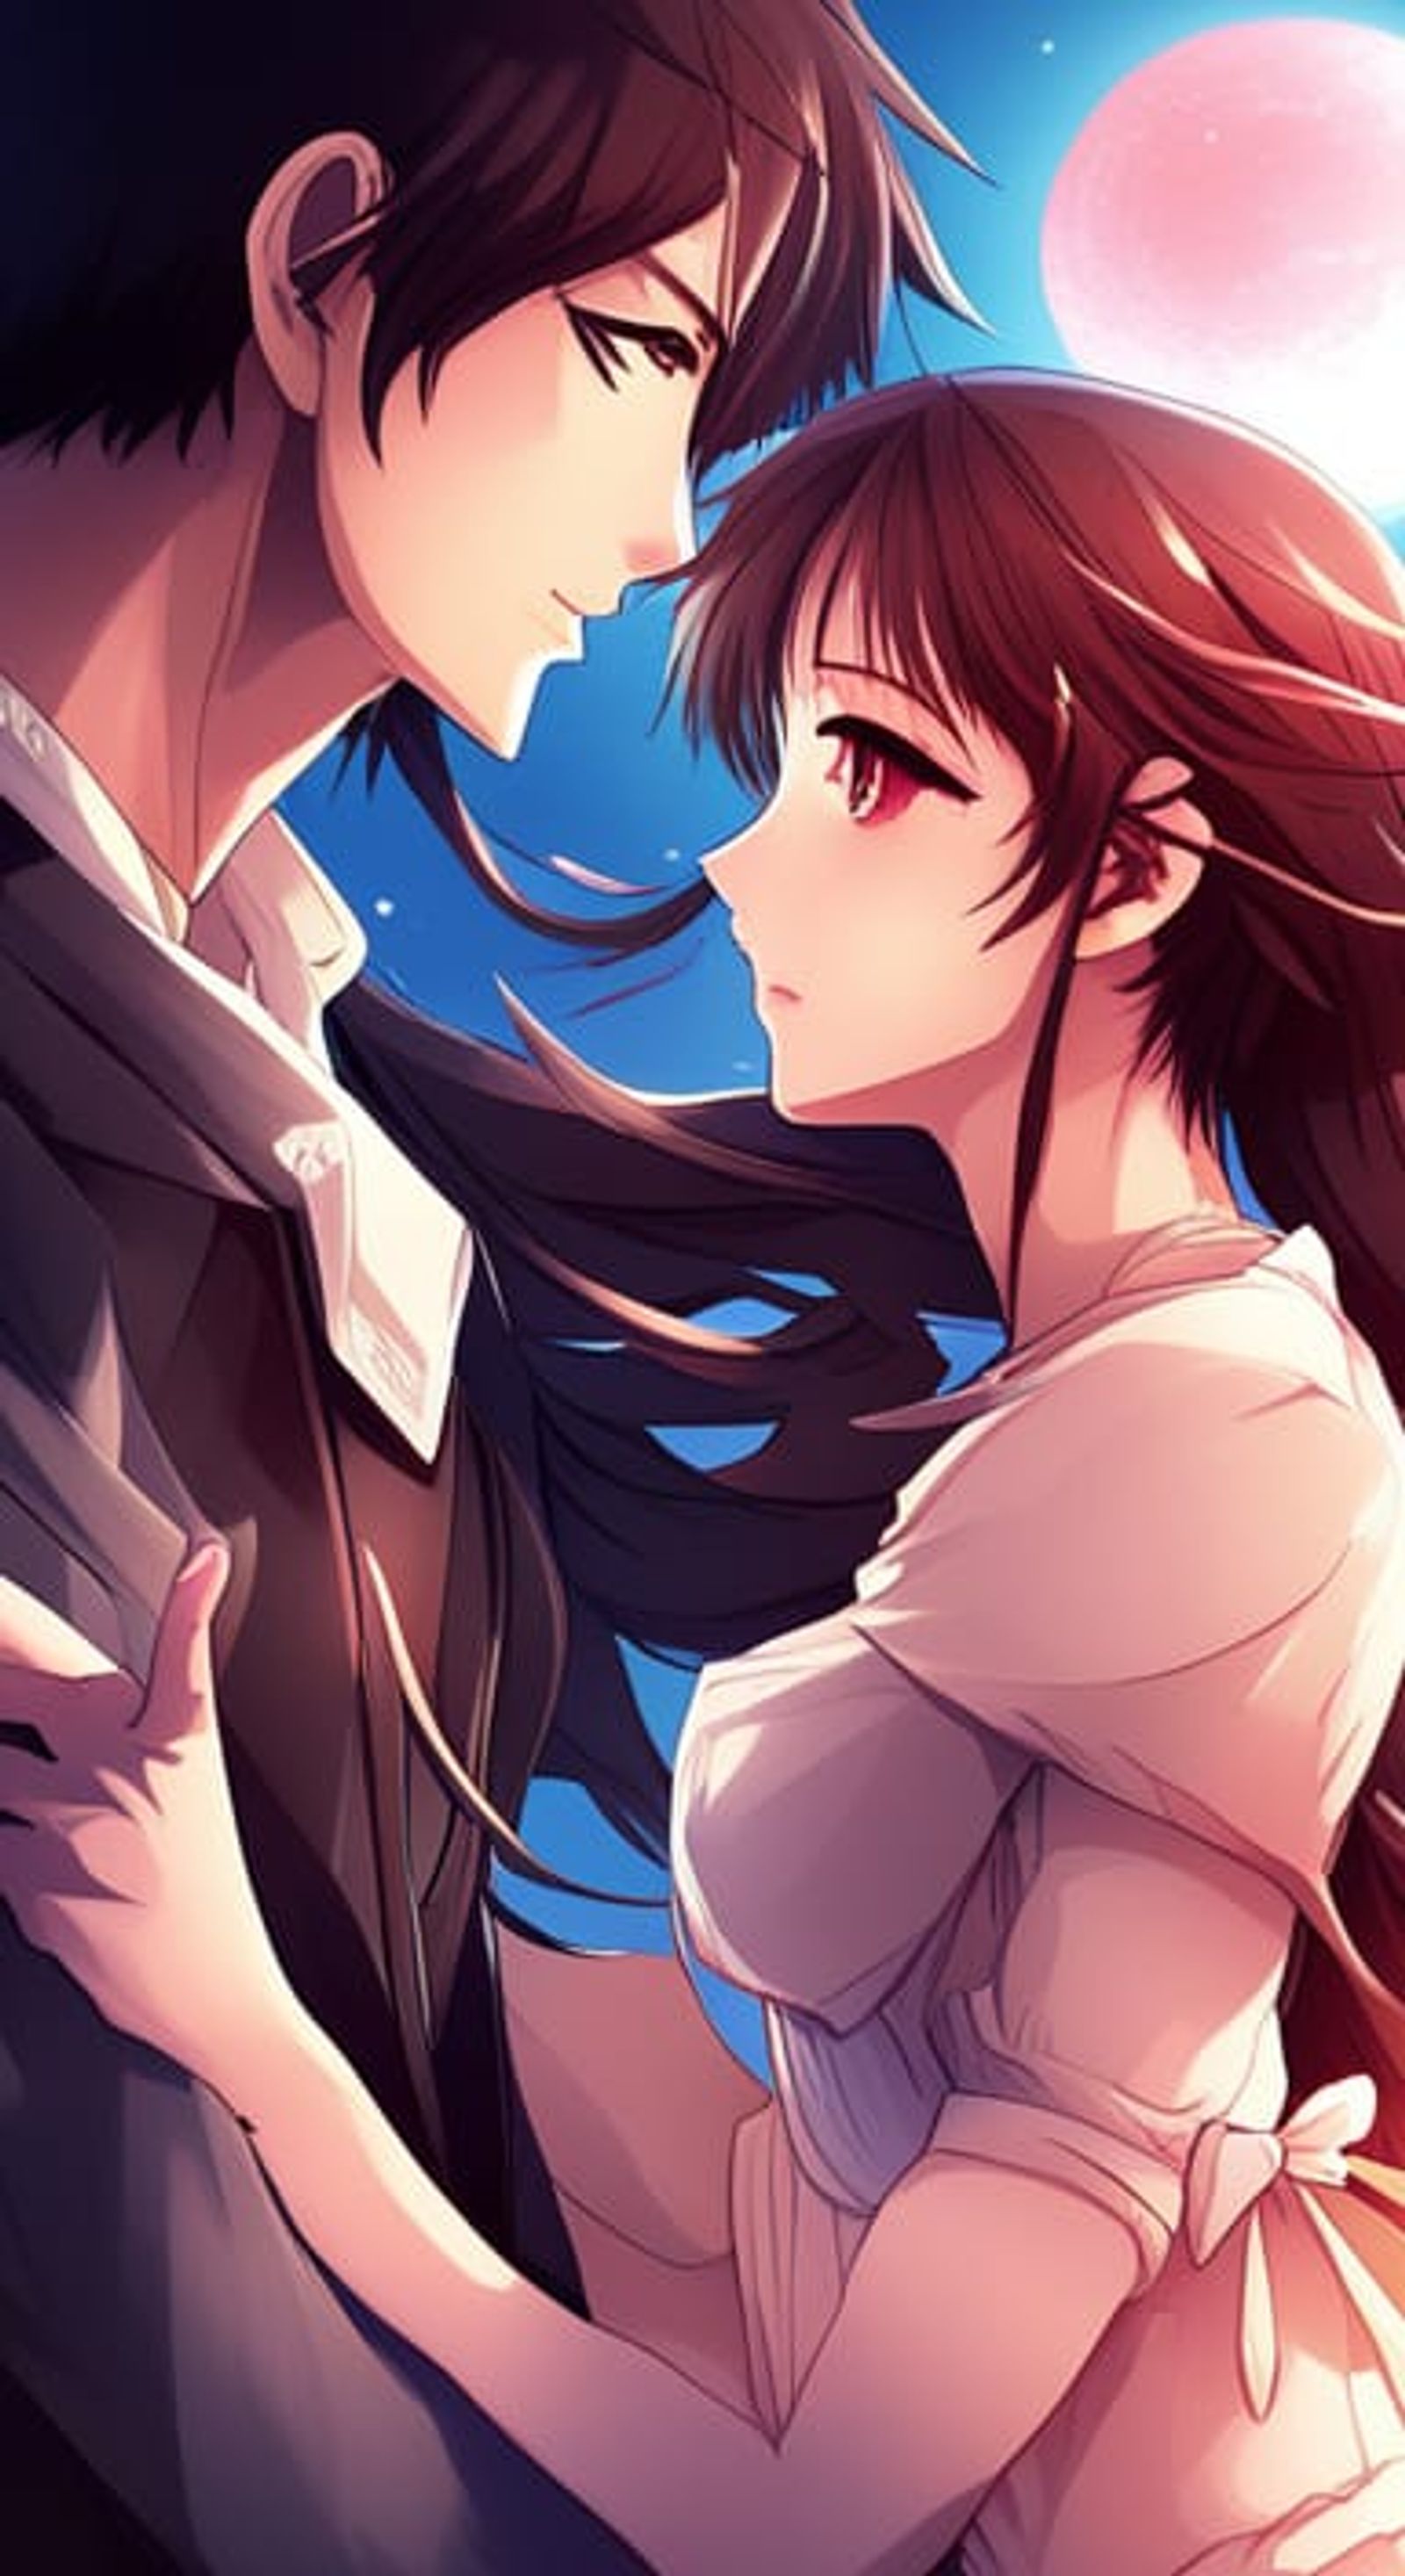 anime couple fighting